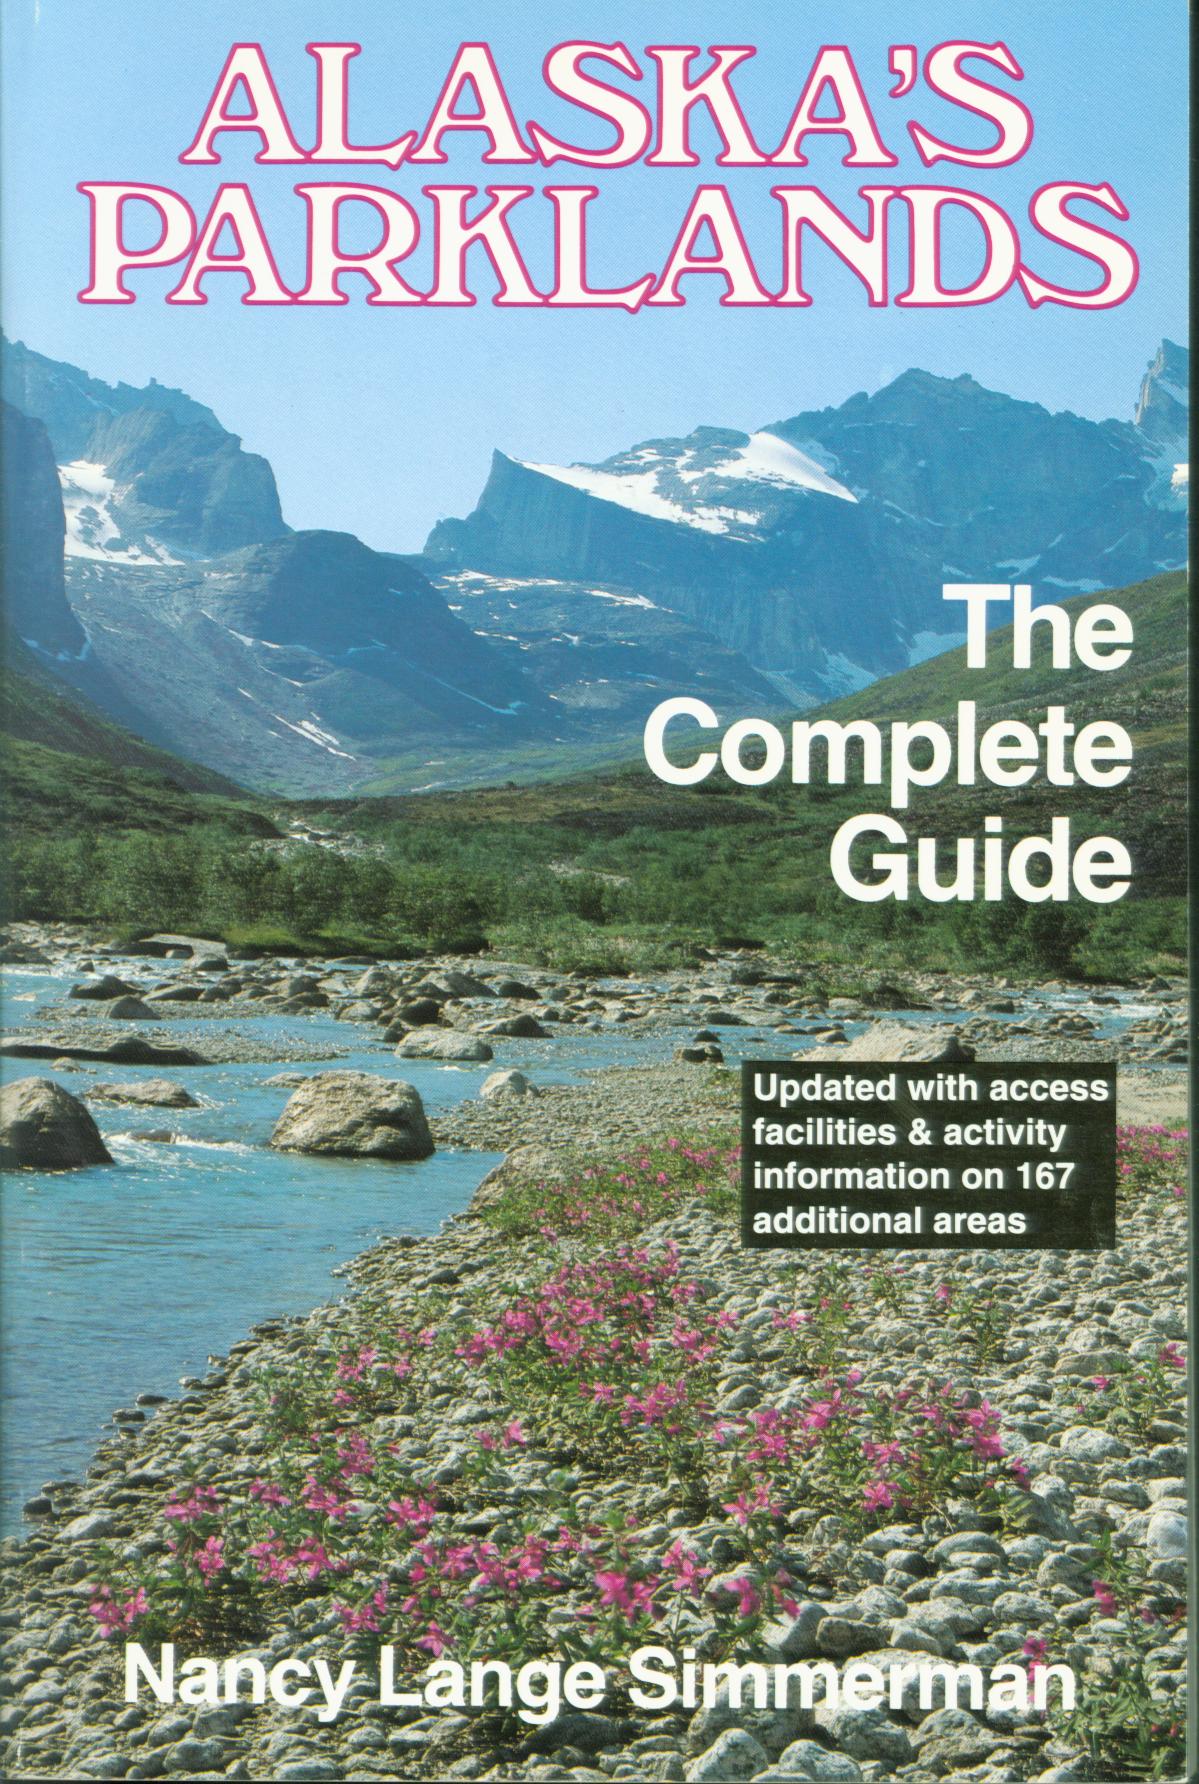 ALASKA'S PARKLANDS: the complete guide. 